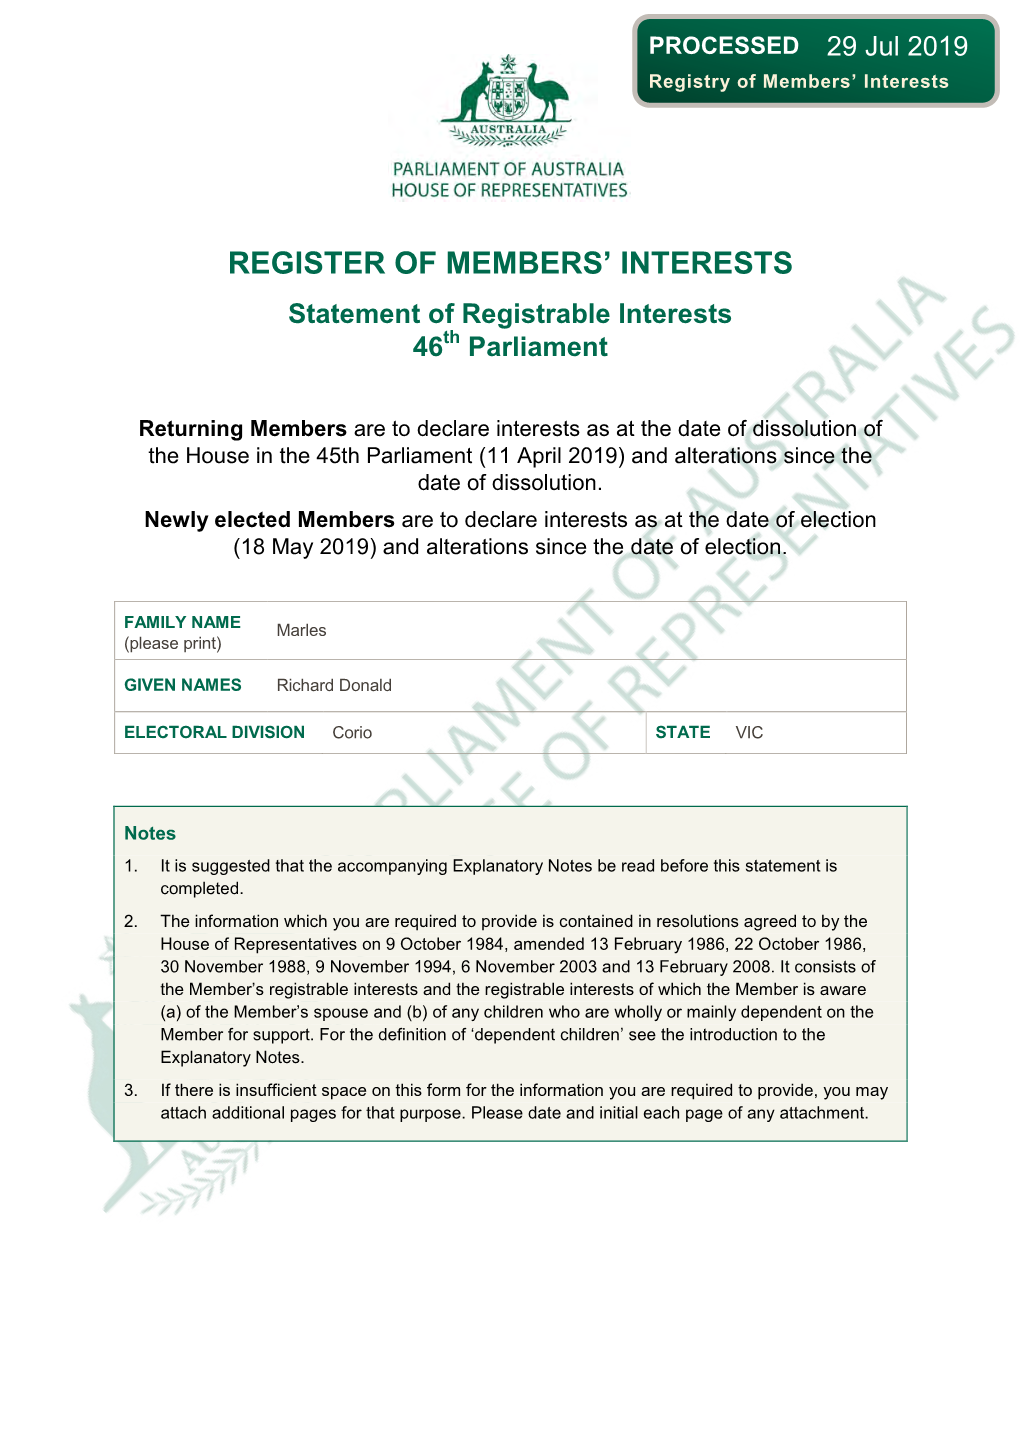 Full Statement of Registrable Interests